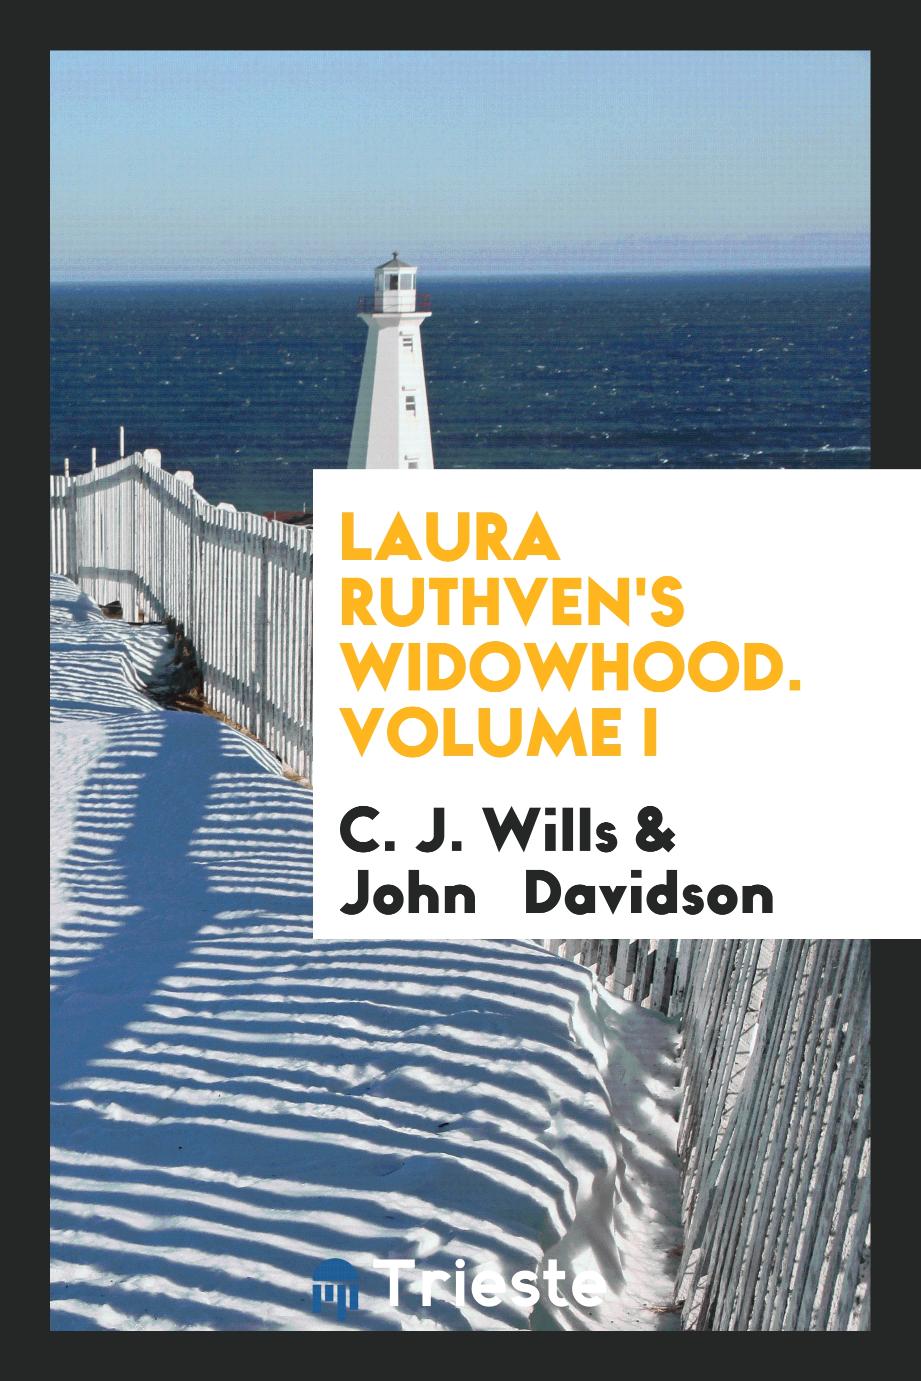 Laura Ruthven's Widowhood. Volume I